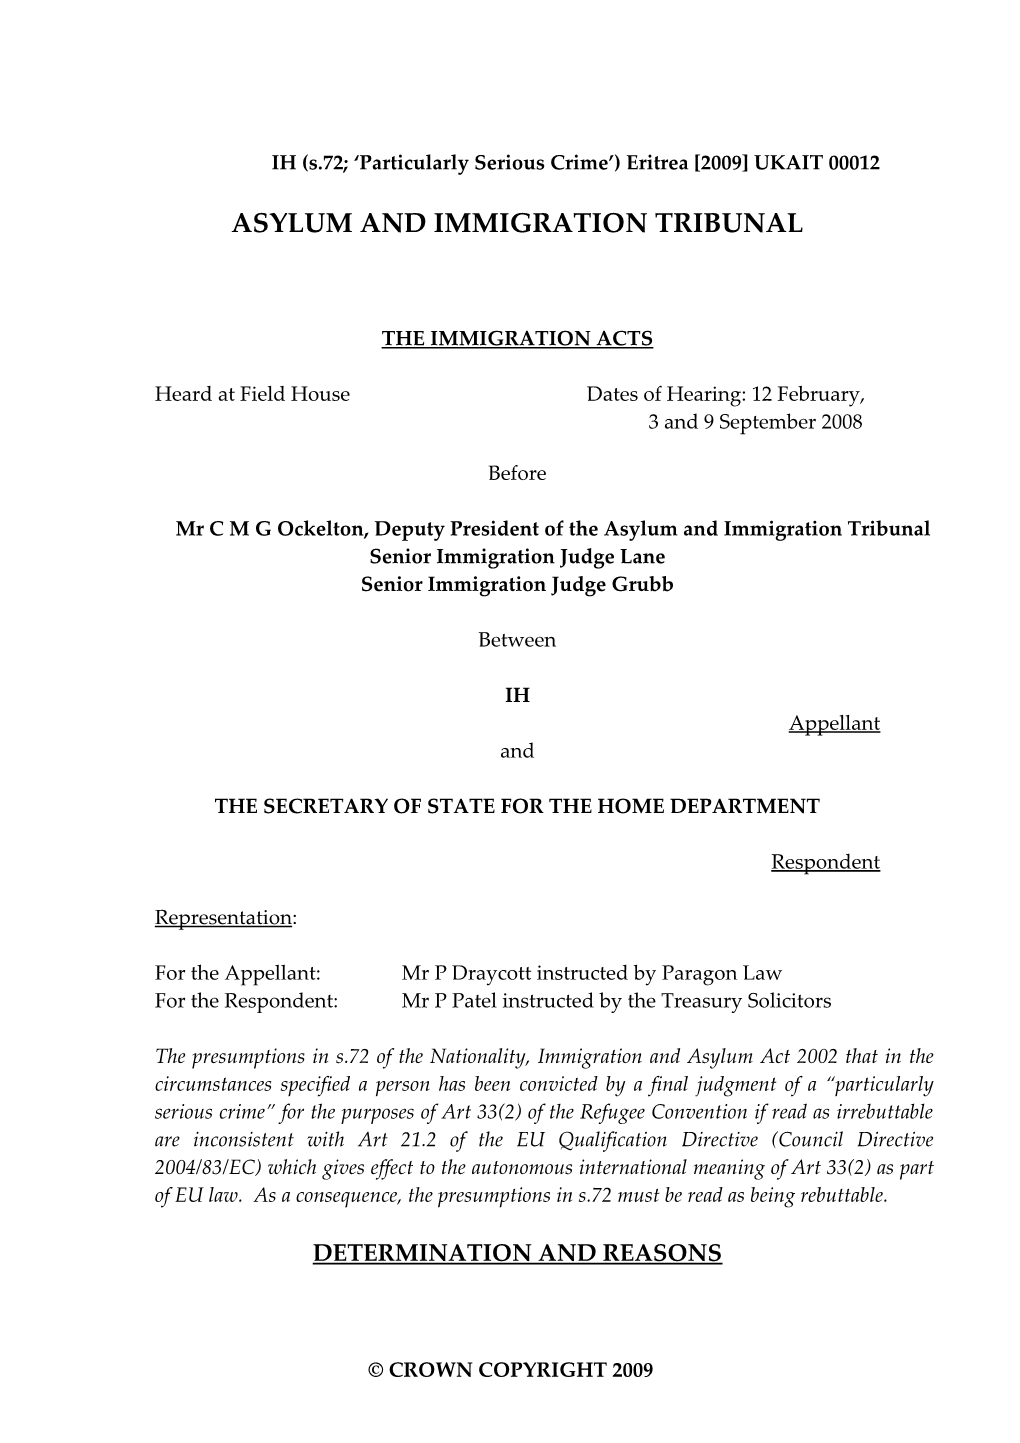 Asylum and Immigration Tribunal s1